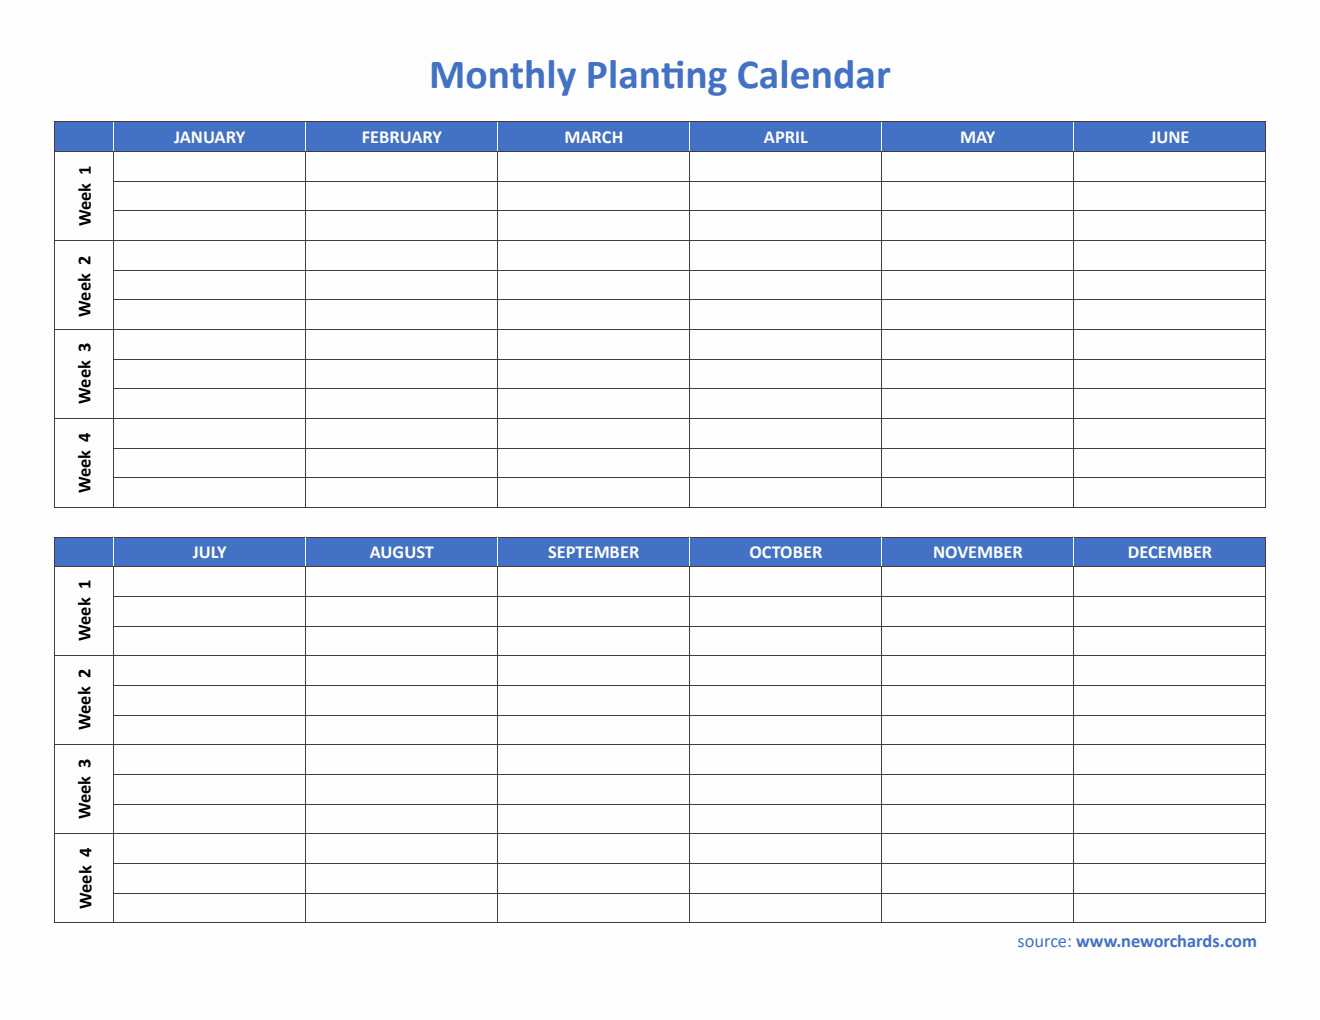 Editable Monthly Planting Calendar in Word